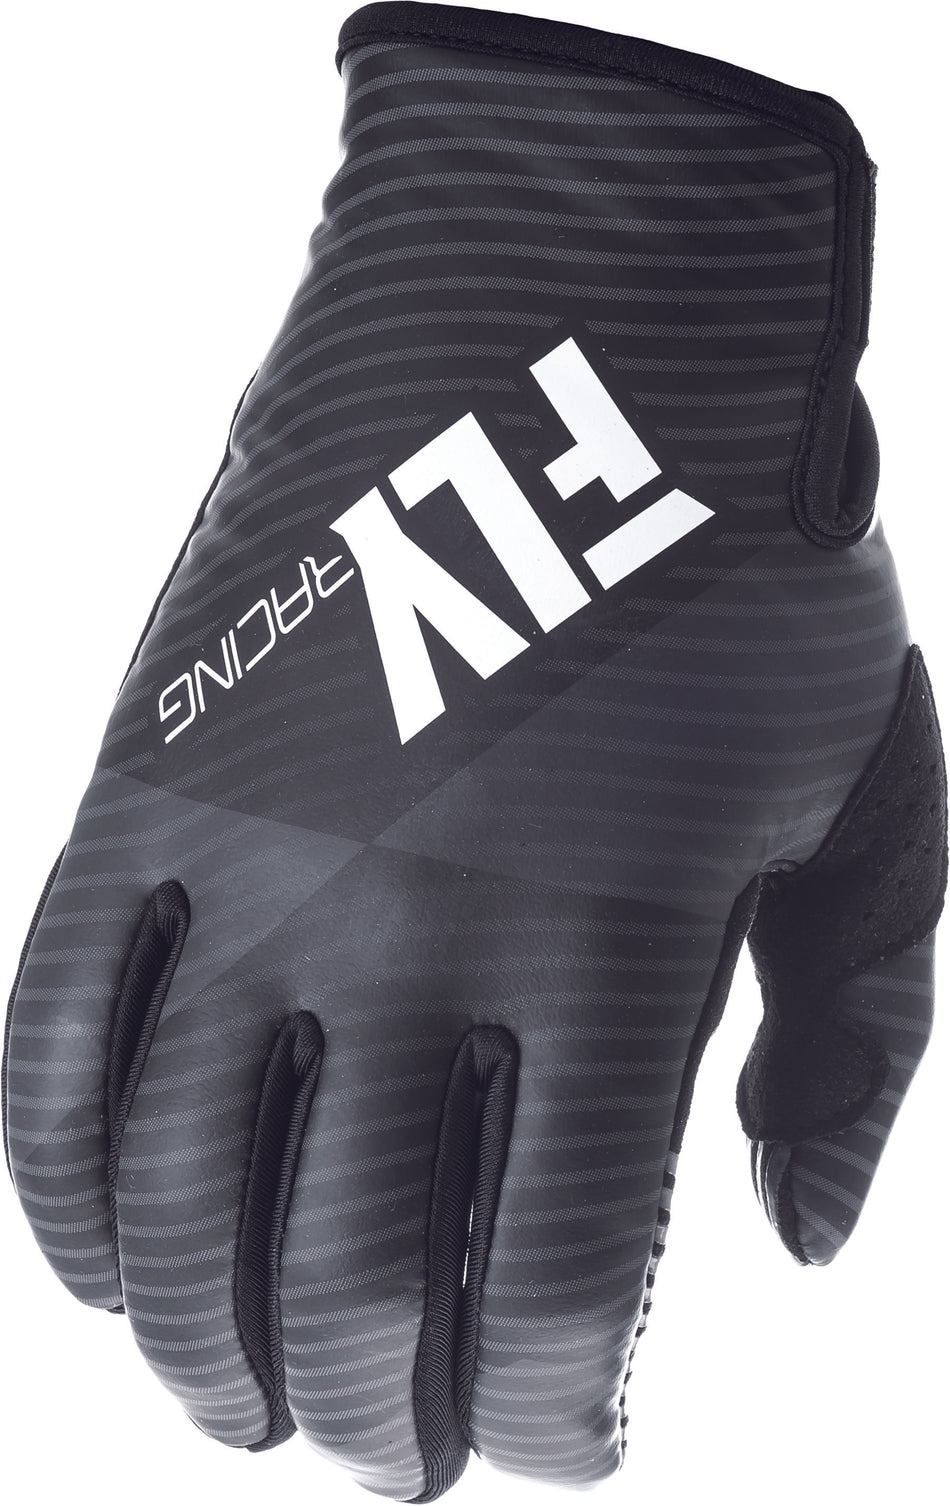 FLY RACING 907 Neoprene Gloves Black/Grey Sz 13 369-64013